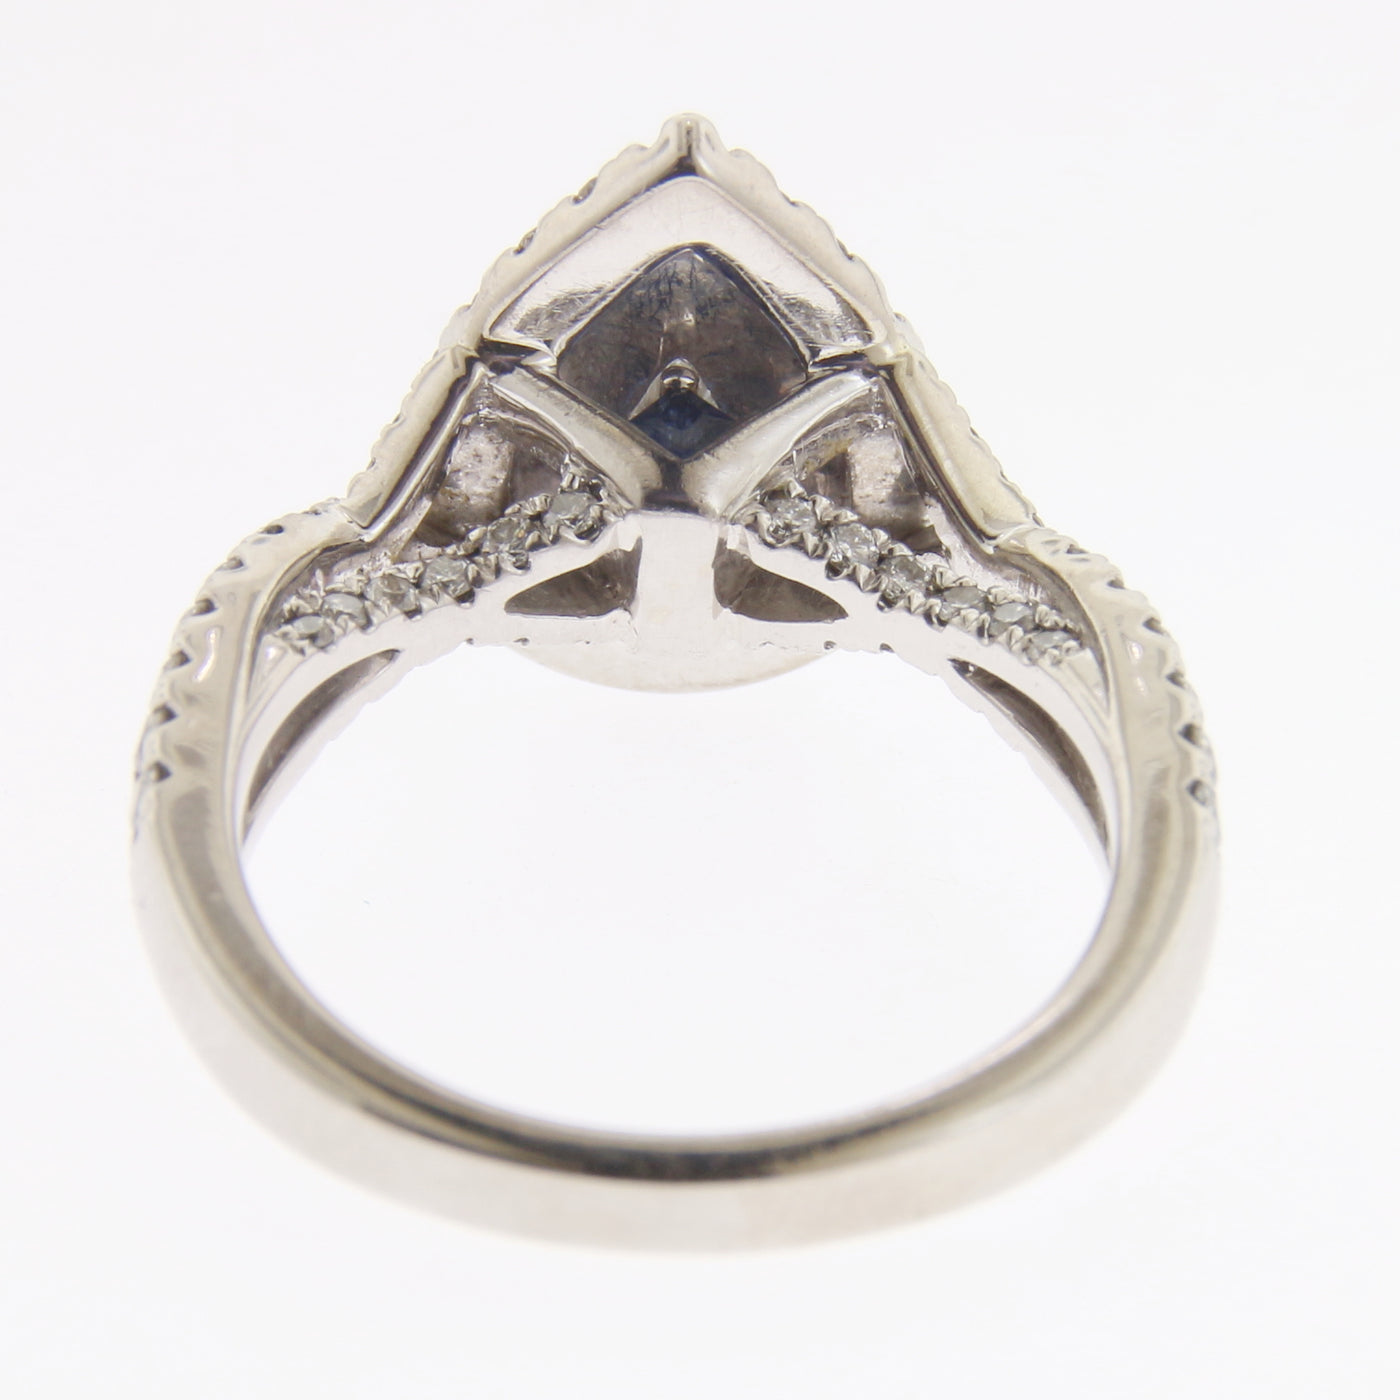 Pear shaped Diamond Ring